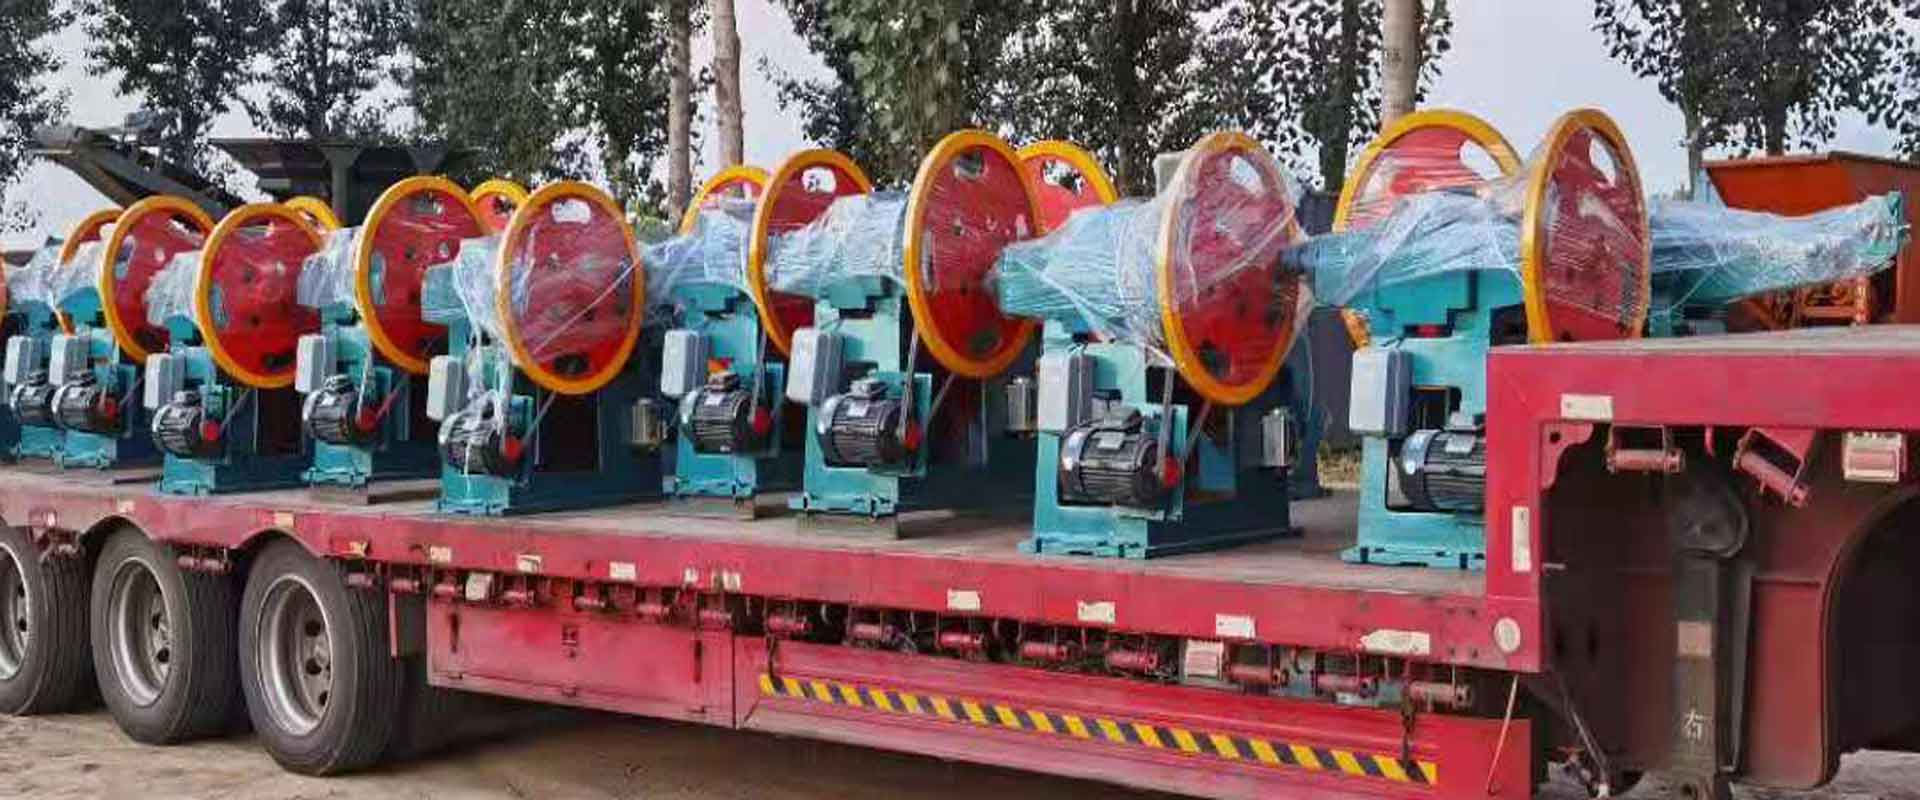 Wire Nail Making Machine Ei N125 Manufacturer | Indian Trade Bird In Rajkot